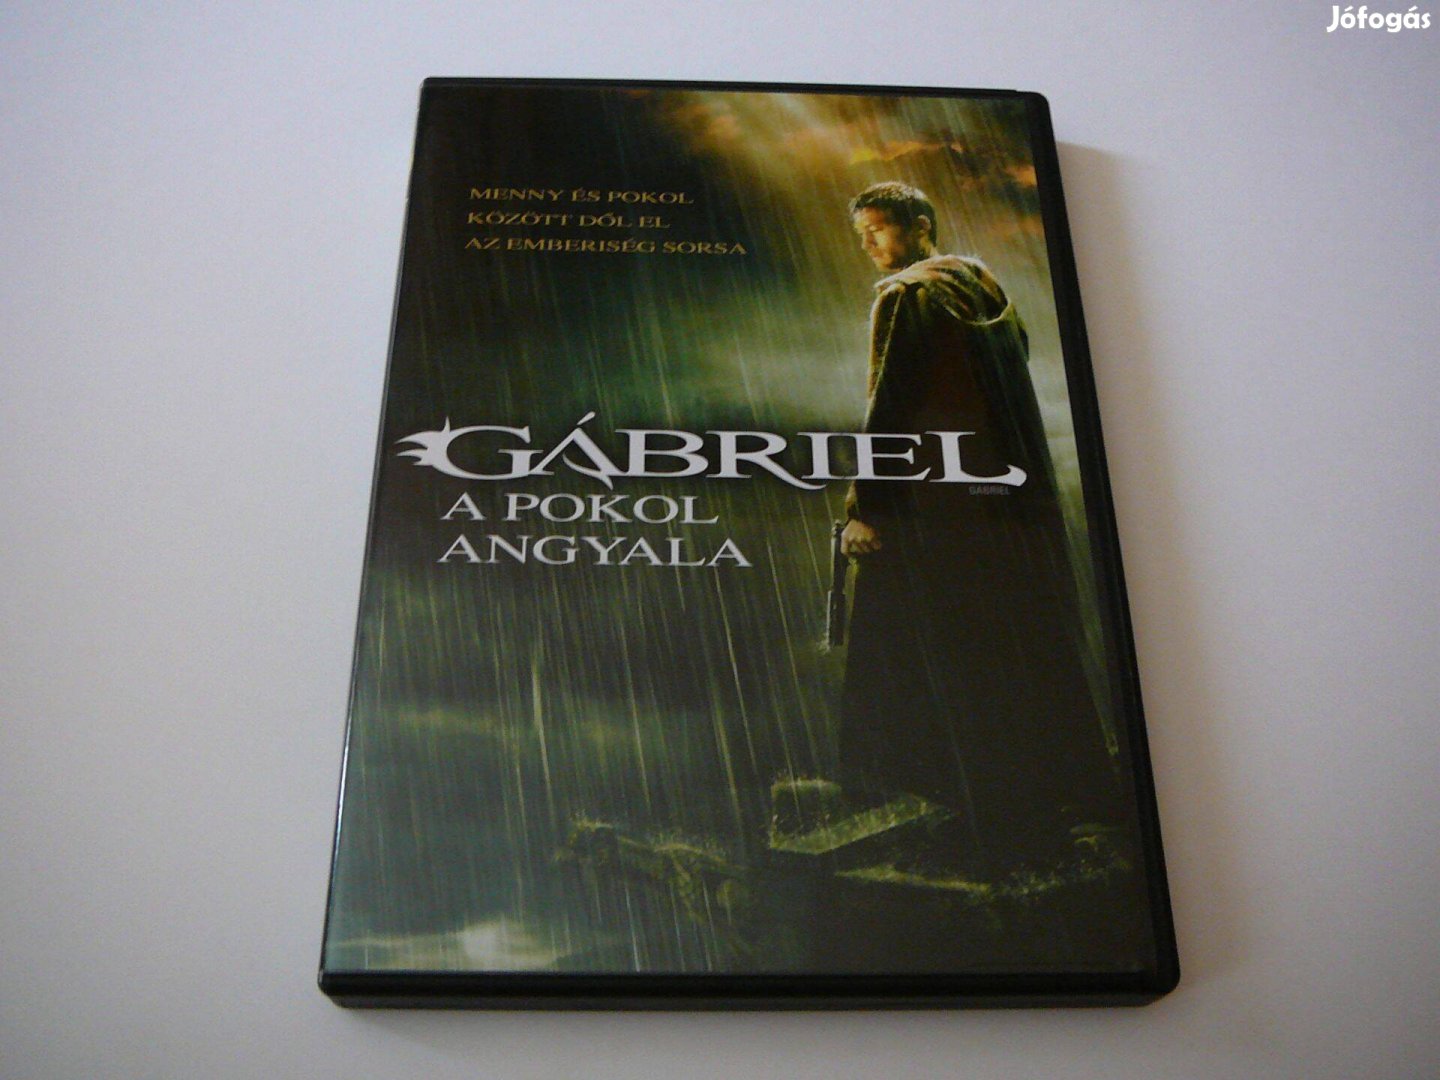 Gábriel - A pokol angyala DVD Film - Szinkronos!